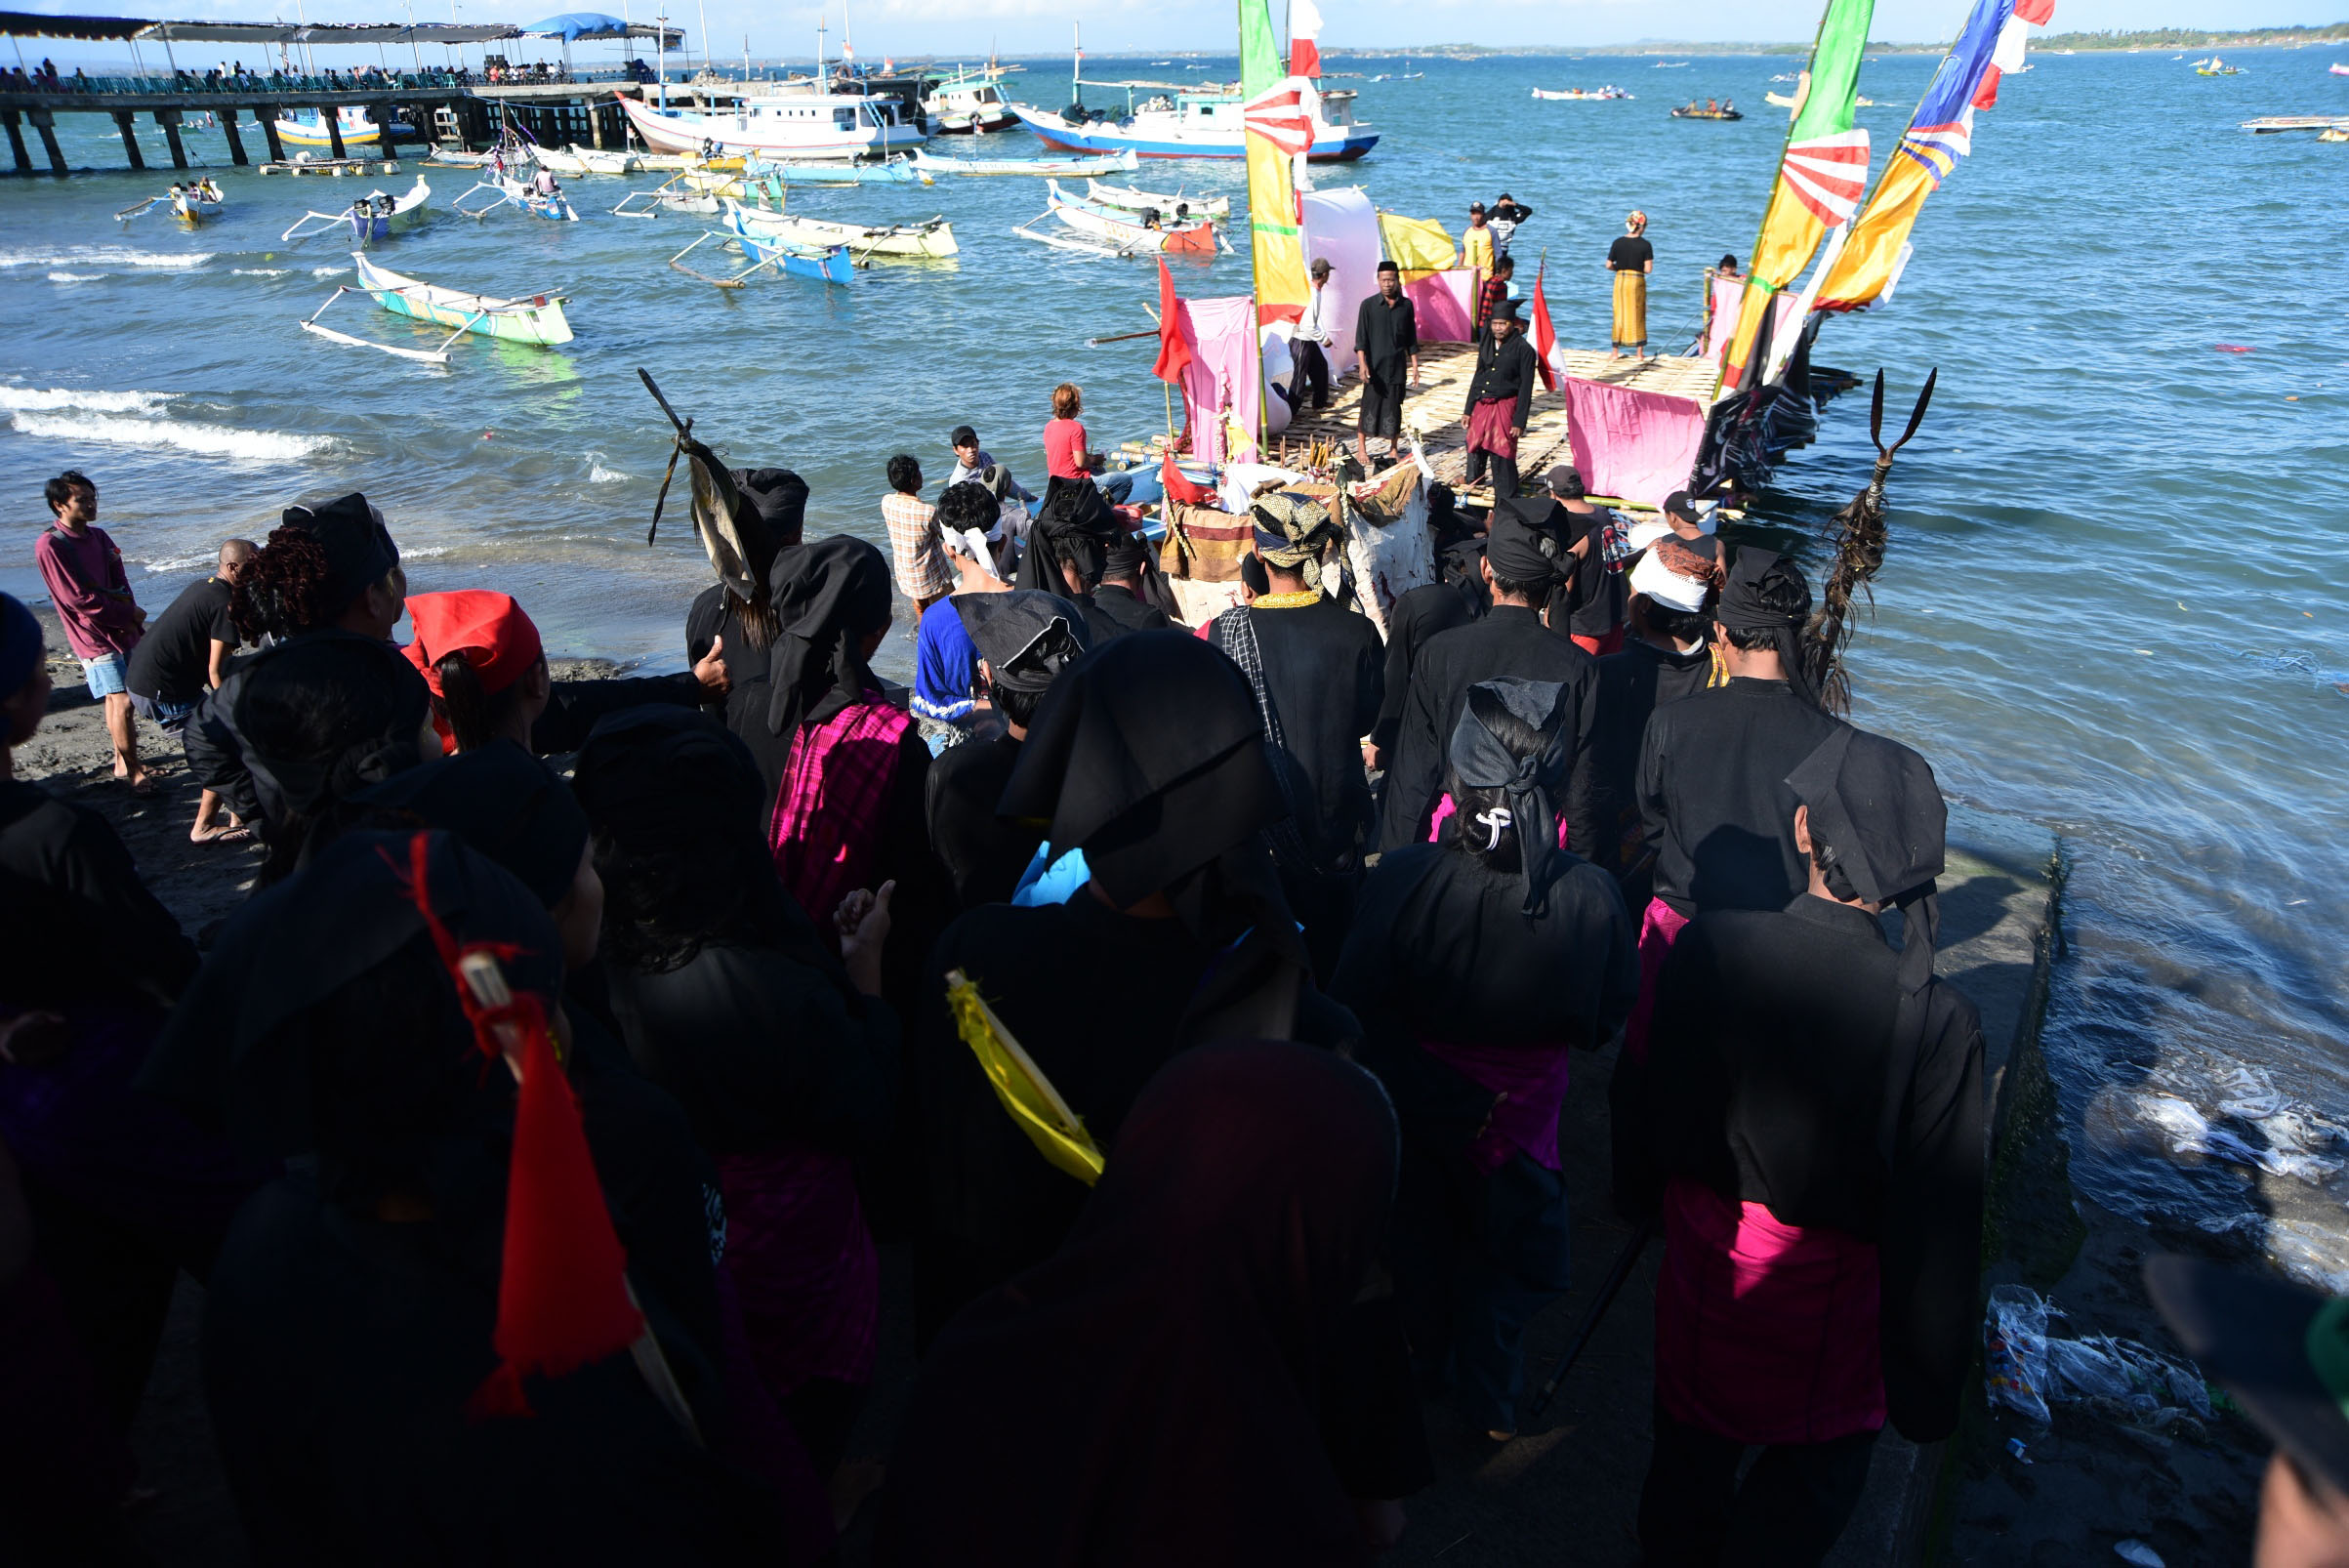 Para tetua adat yang memimpin ritual selamatan laut “nyalamaq dilauq” di Tanjung Luar, bersiap naik perahu yang membawa mereka ke titik pelarungan. Foto: Fathul Rakhman/ Mongabay Indonesia